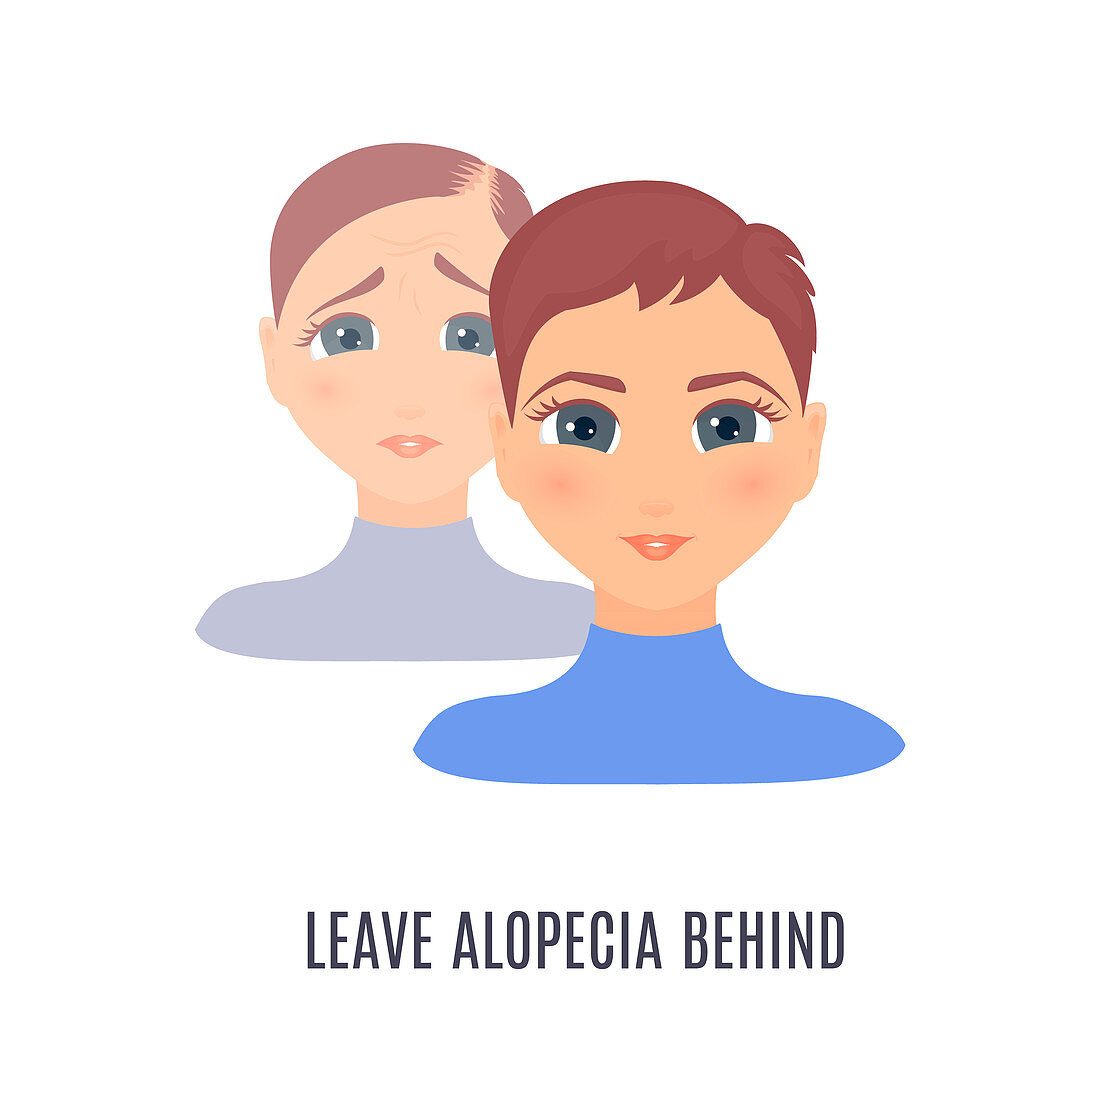 Female alopecia treatment, conceptual illustration